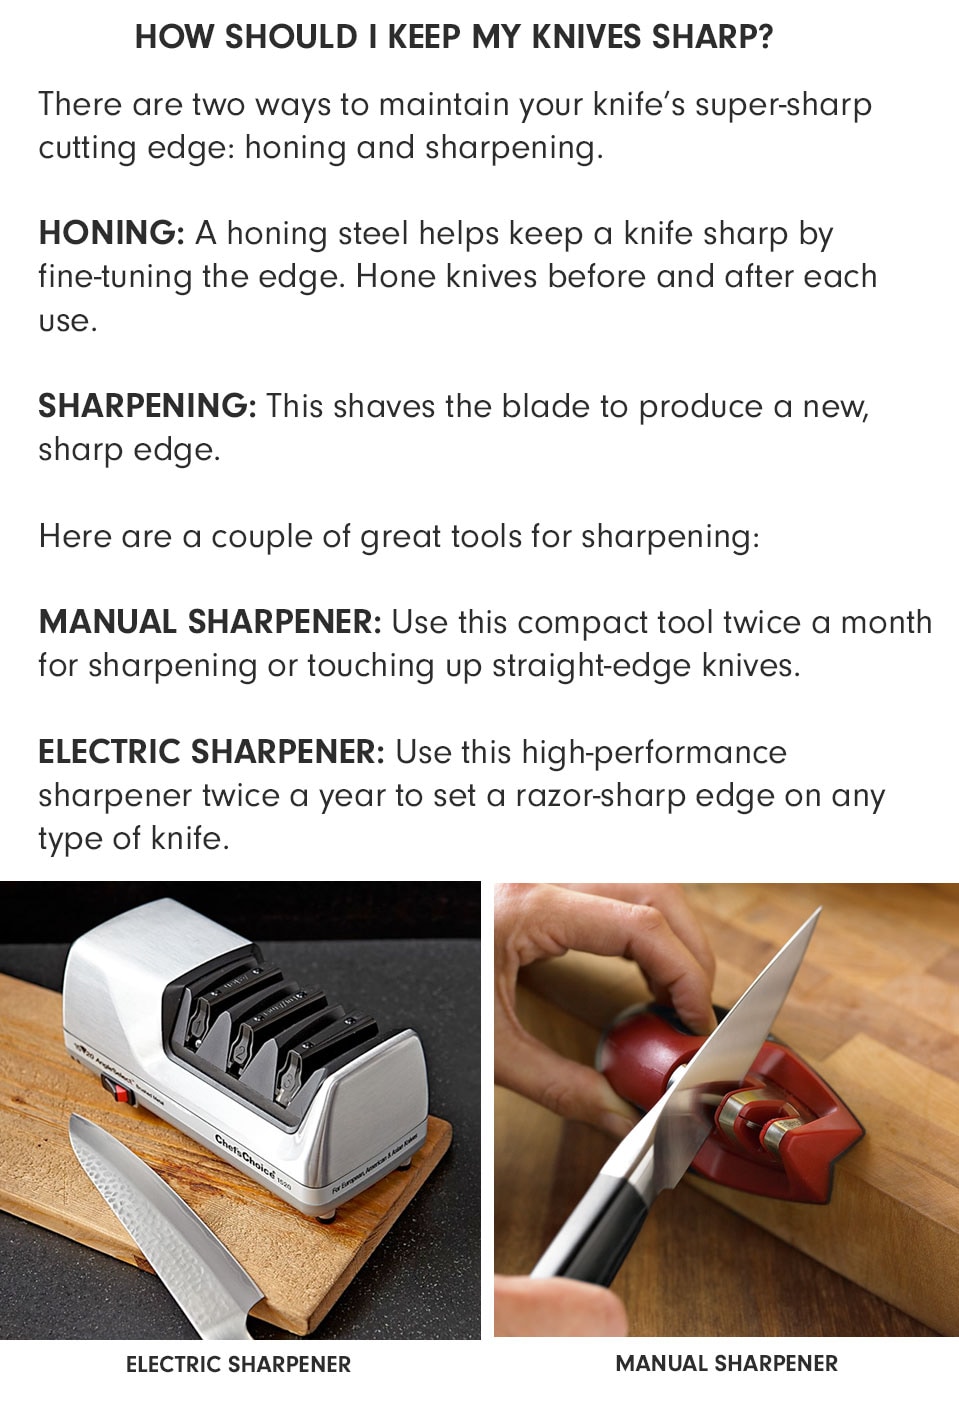 How Should I Keep My Knives Sharp?